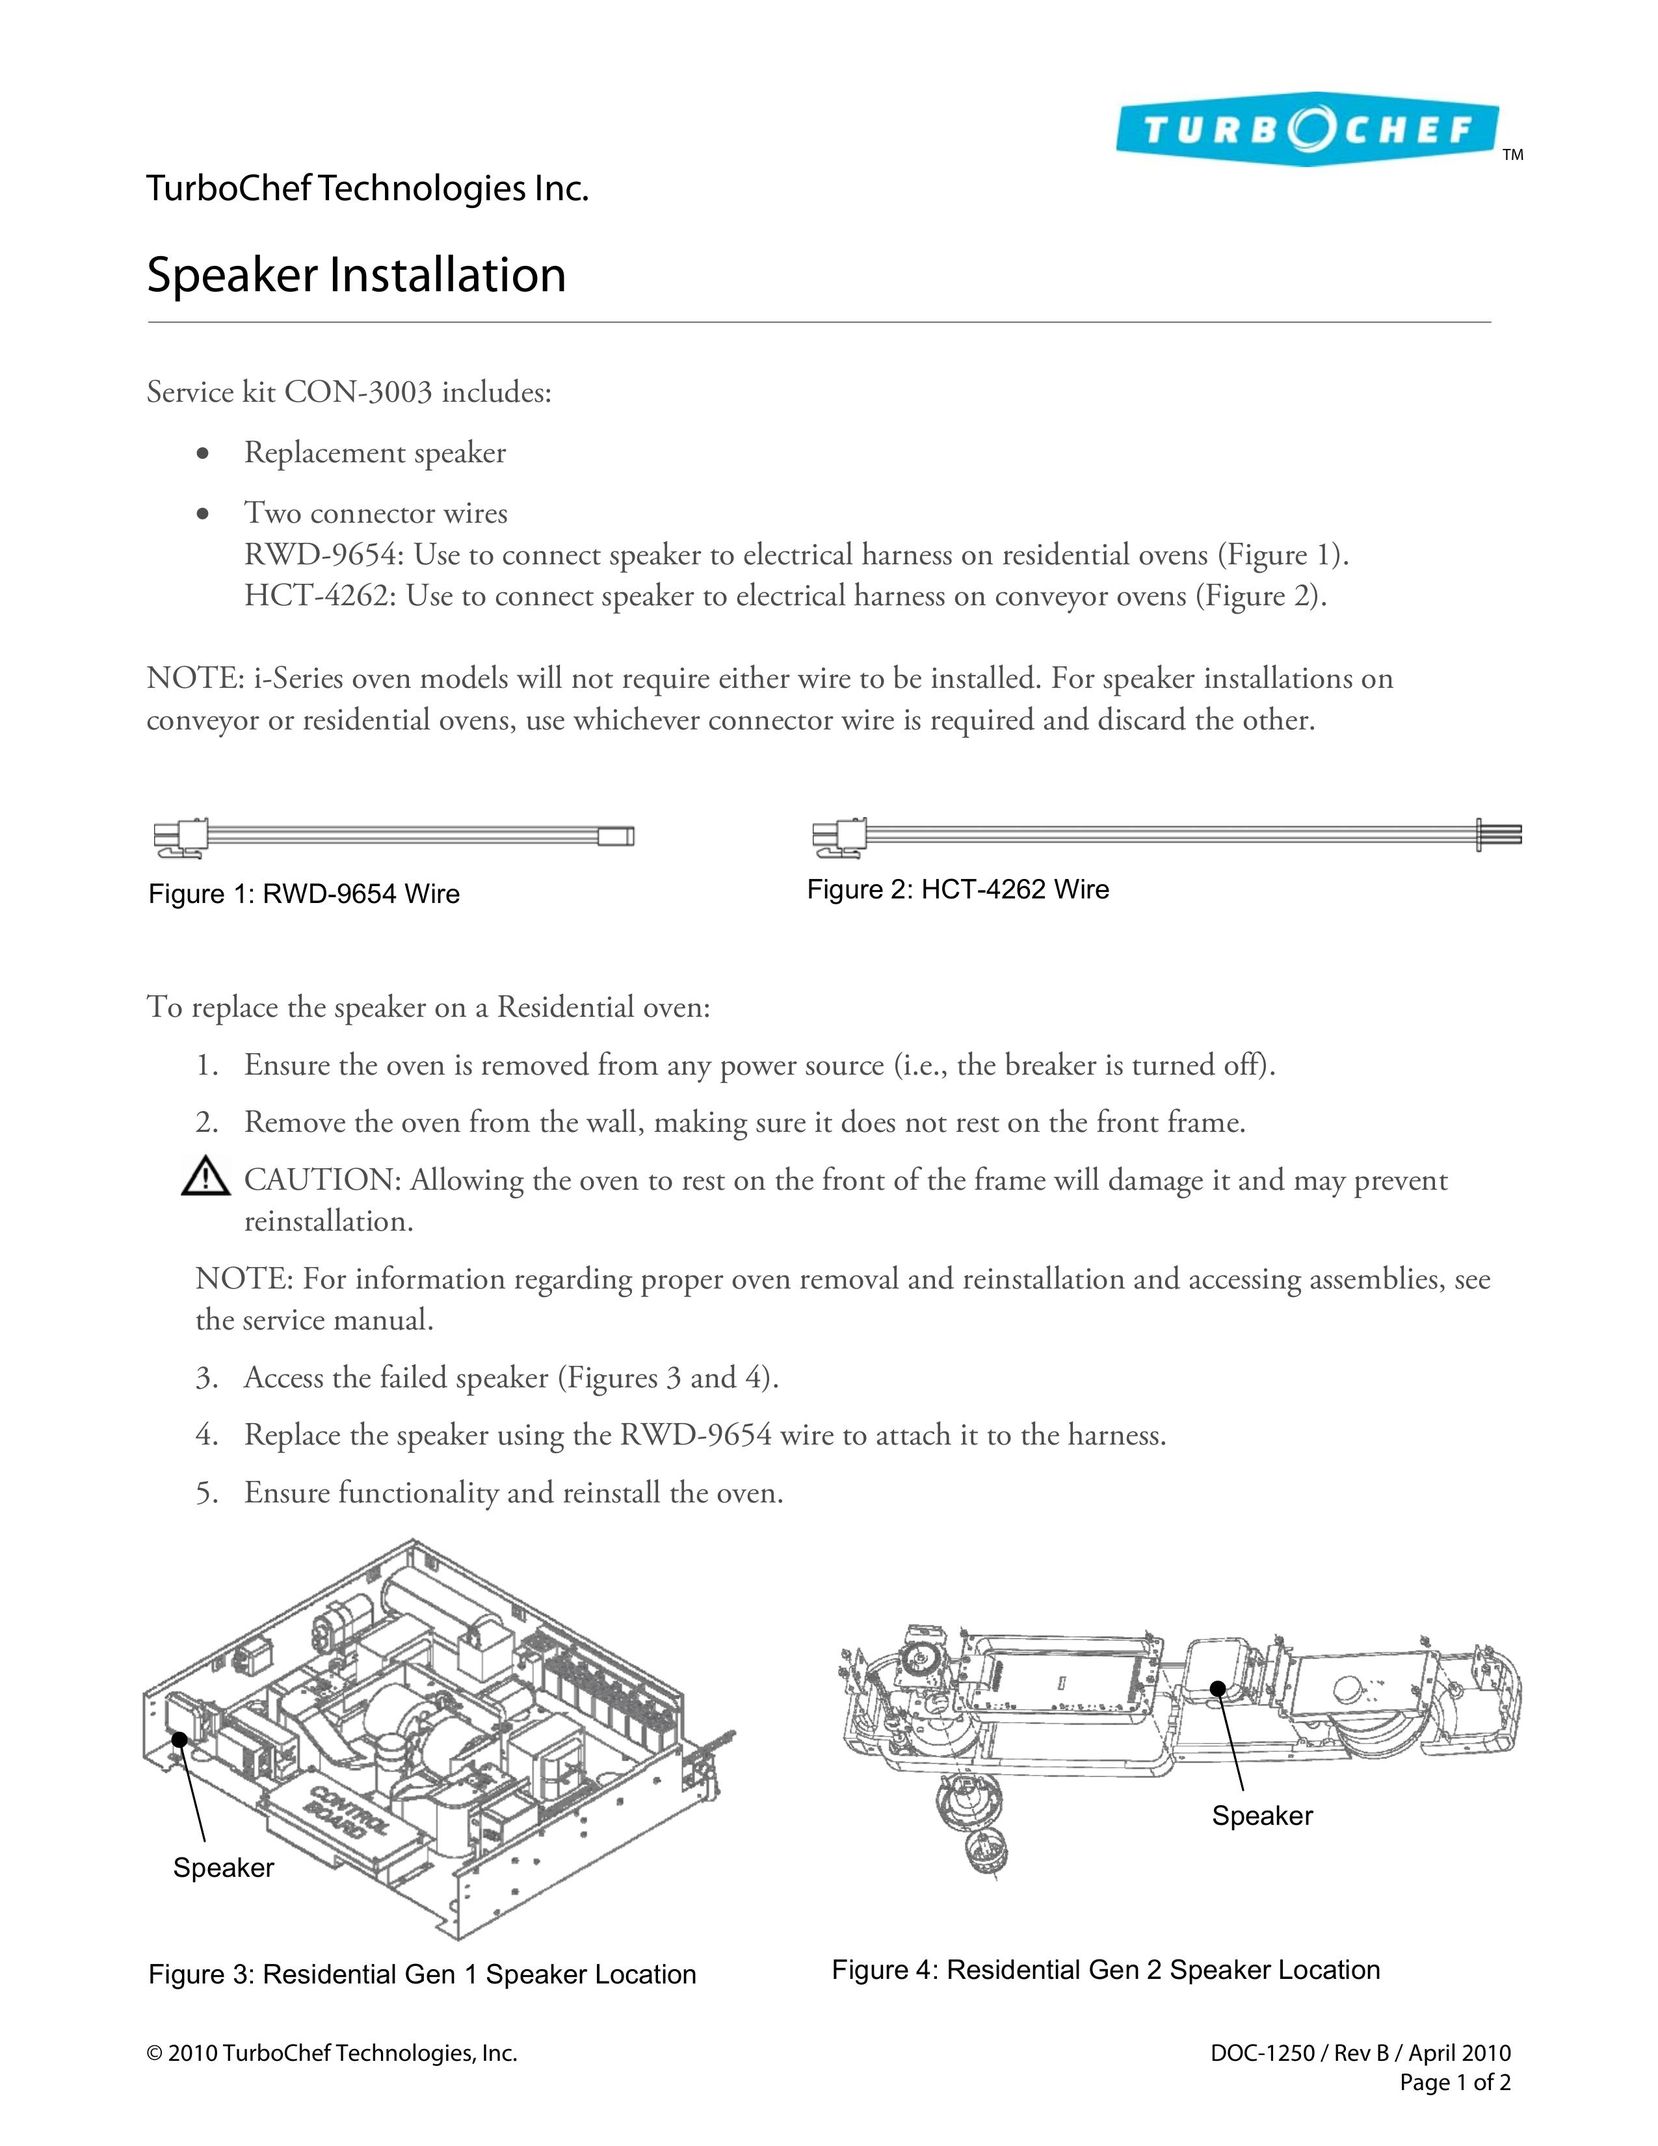 Turbo Chef Technologies CON-3003 Car Speaker User Manual